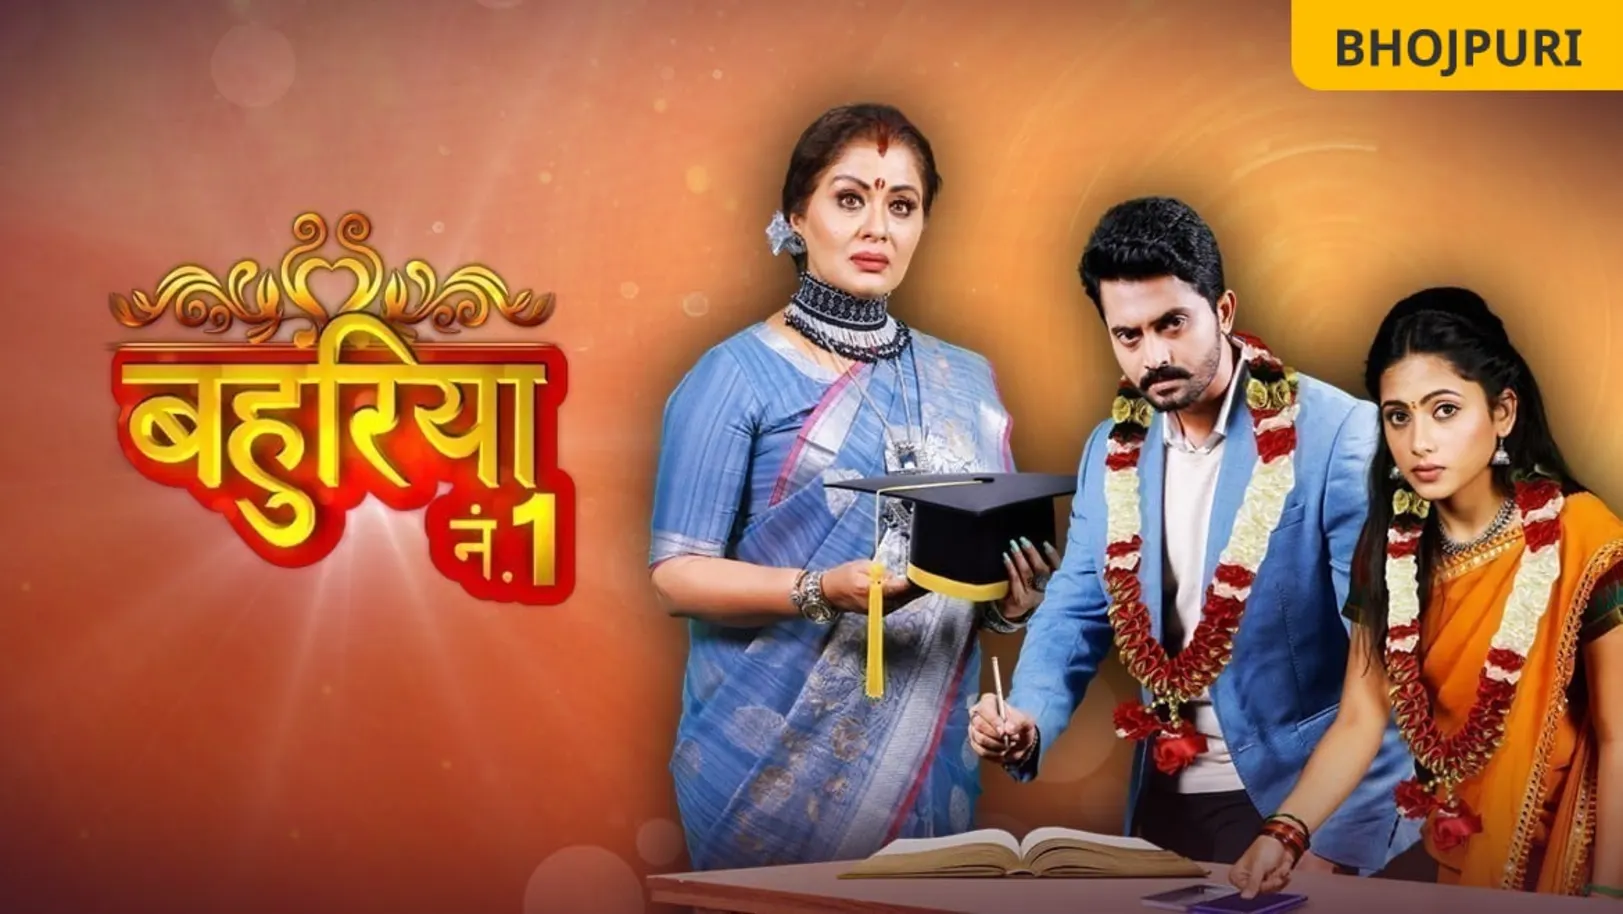 Bahuriya No. 1 TV Show